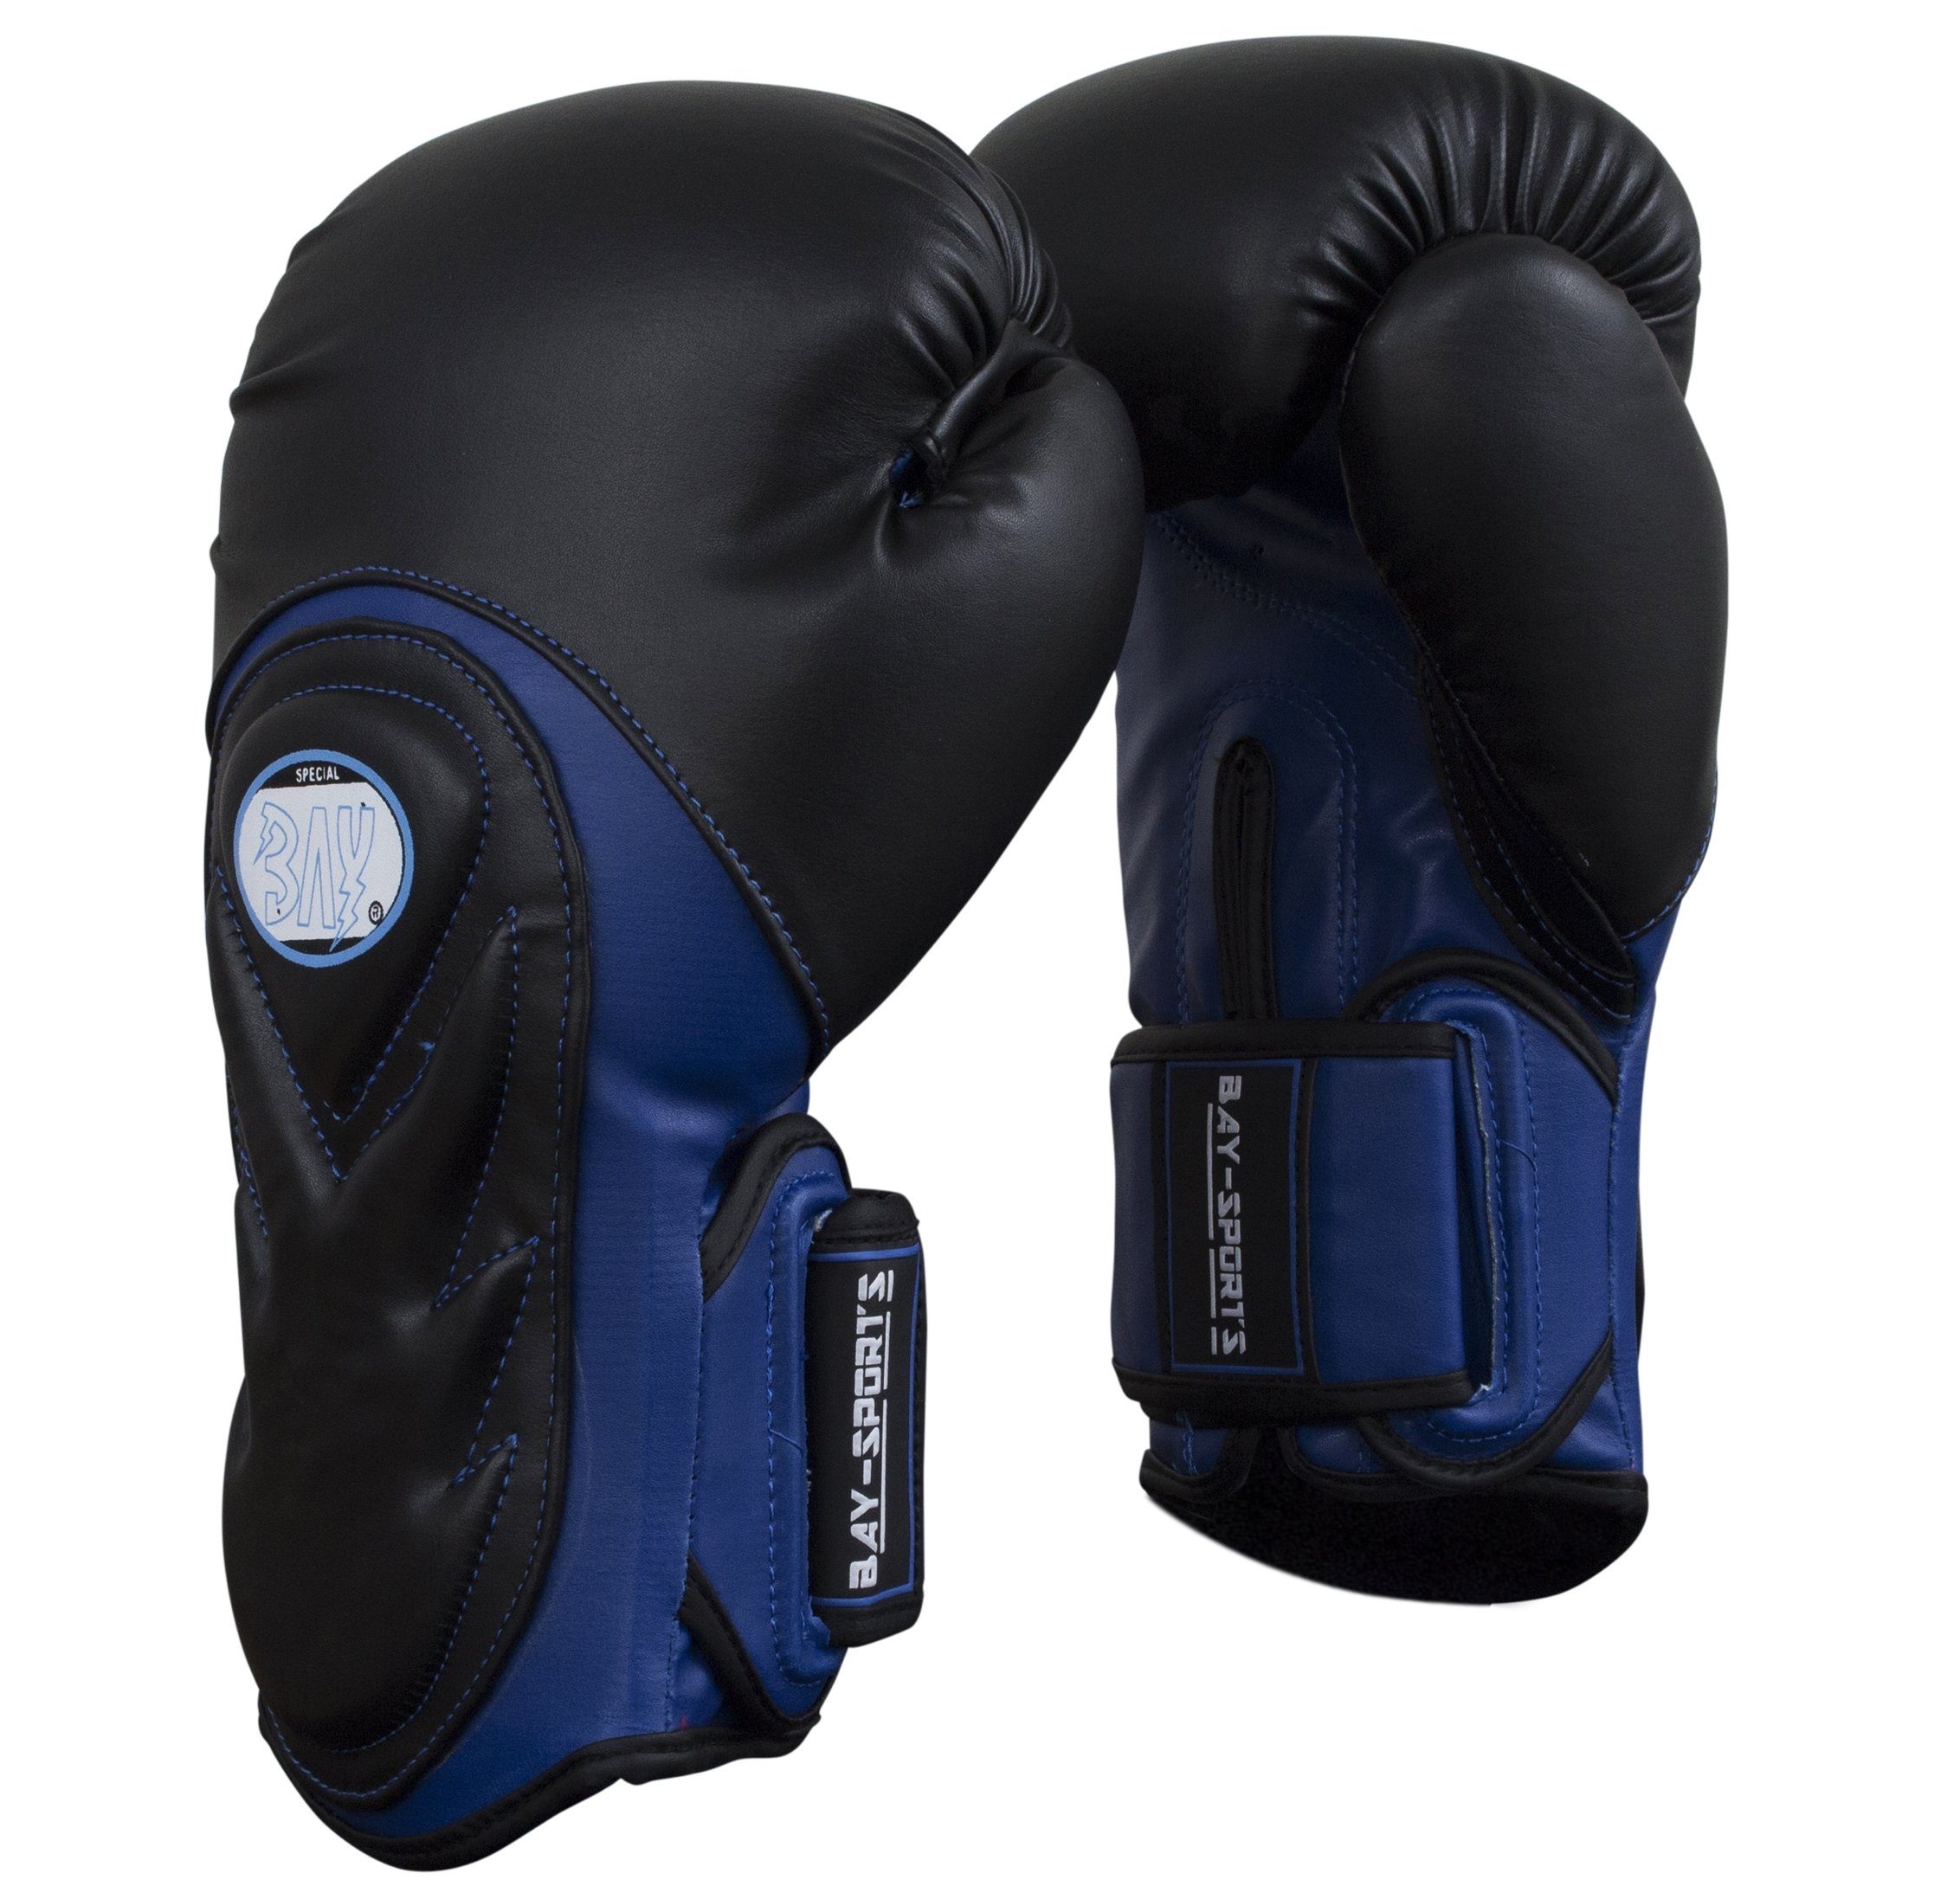 Style Box-Handschuhe Boxhandschuhe Bad schwarz/blau Boxen Kickbo BAY-Sports